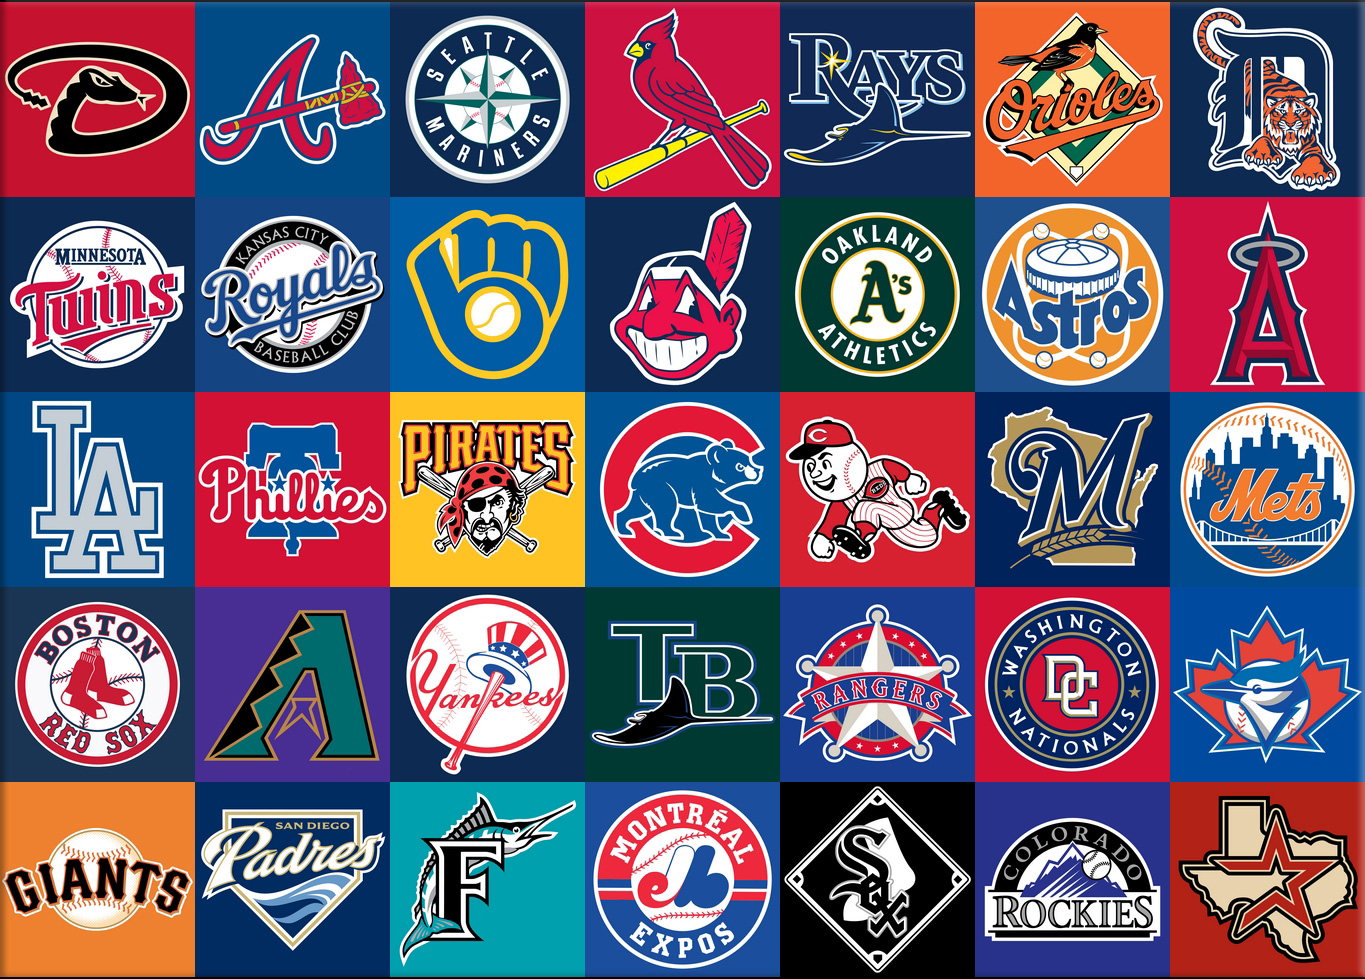 Major League Baseball Logos